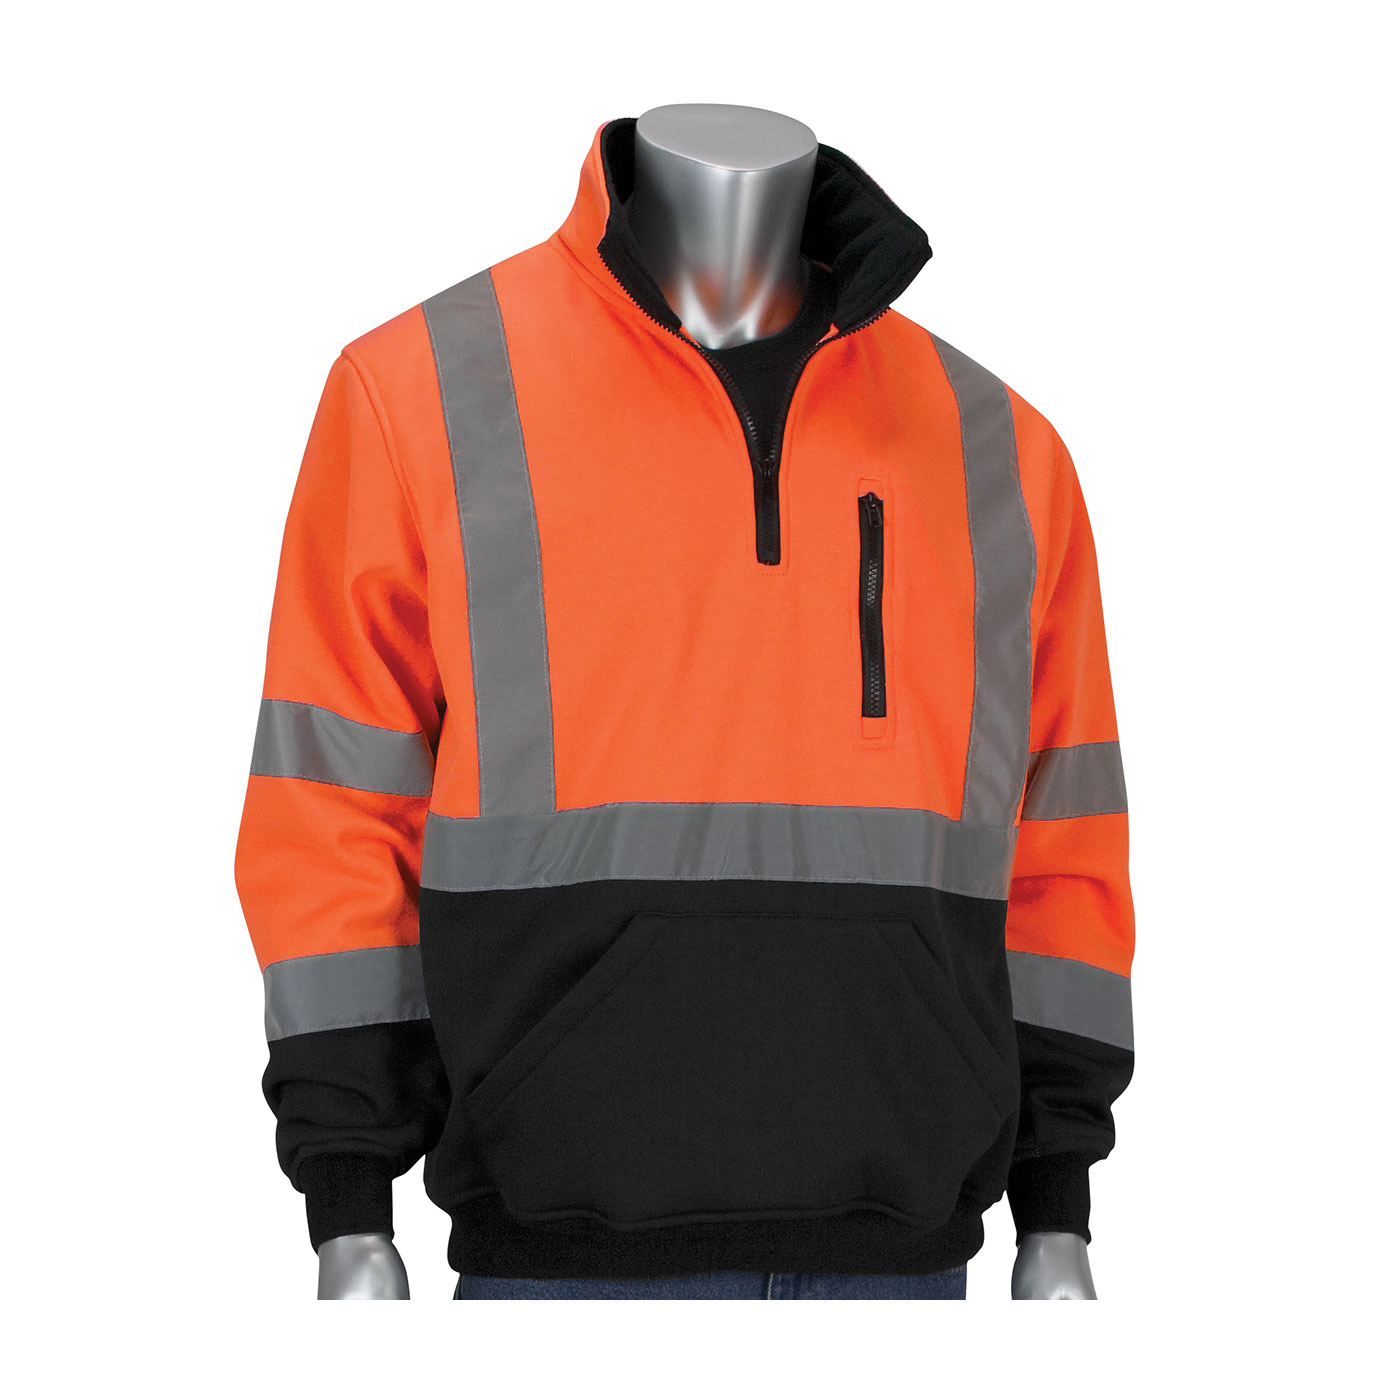 PIP® 323-1330B-OR/S Sweatshirt With Black Bottom, Unisex, S, Orange, 28.3 in L, Polyester Fleece